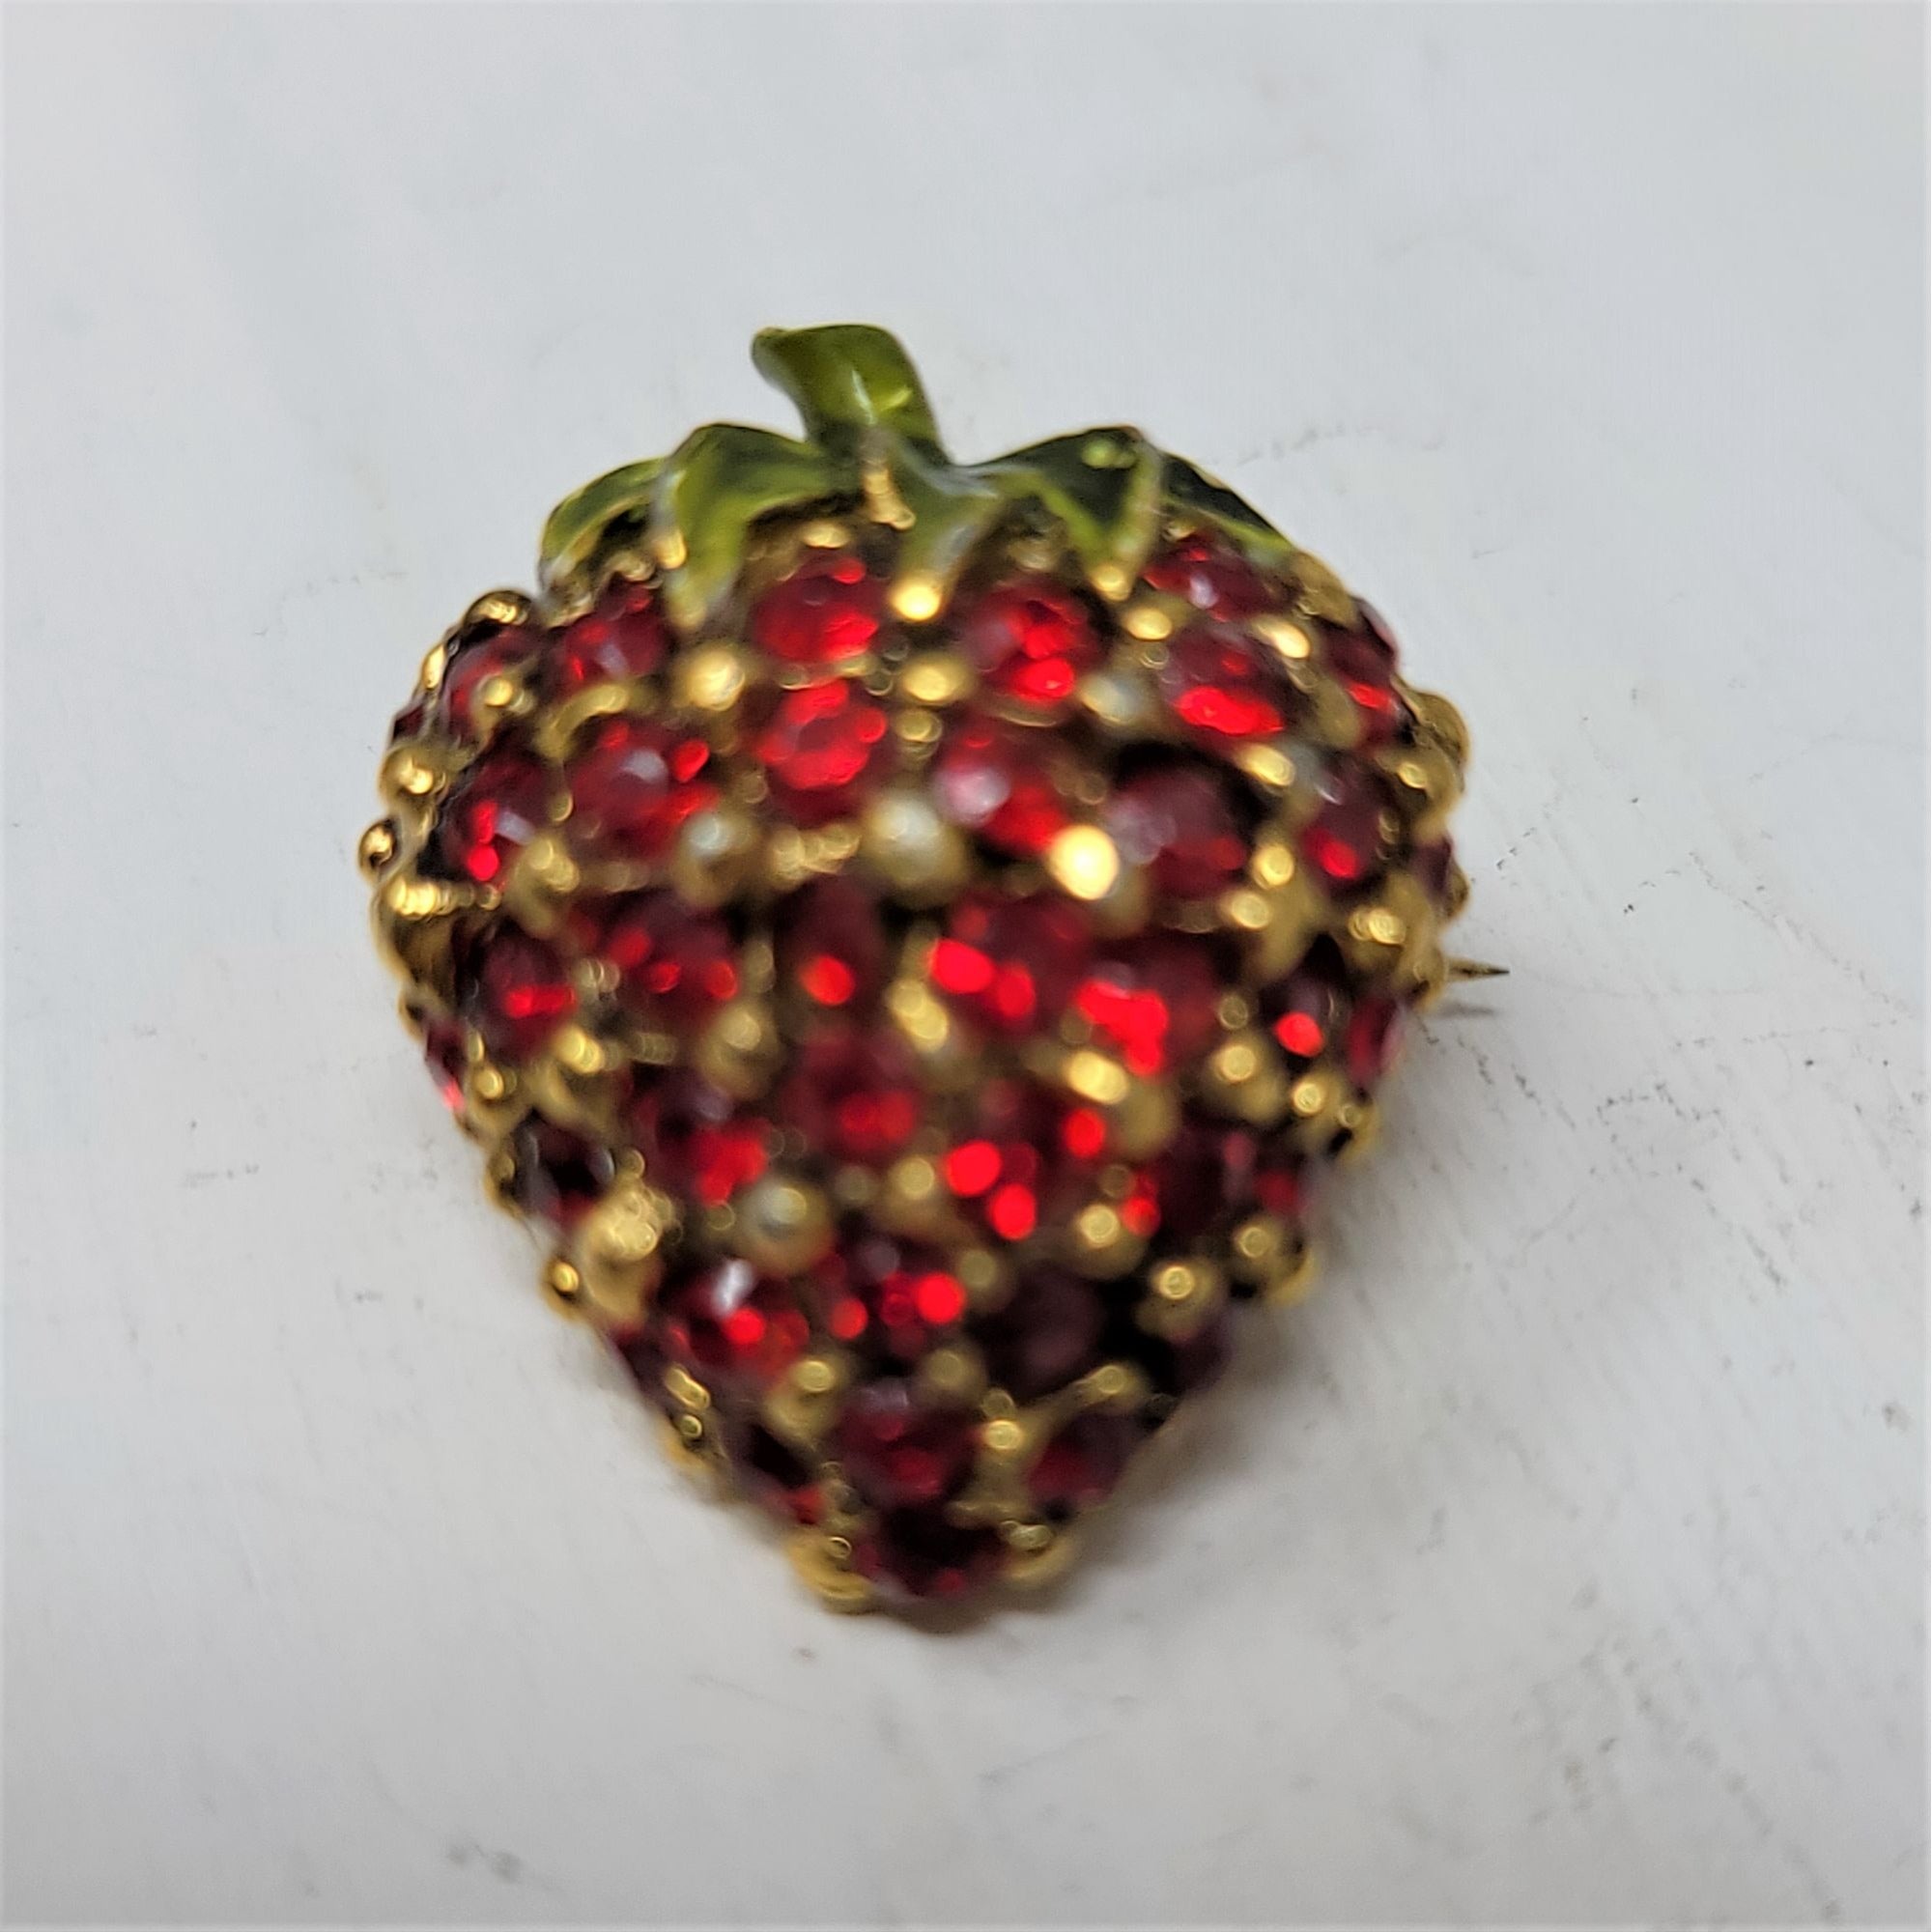 Ruby Red Rhinestone Strawberry Pin Brooch Goldtone